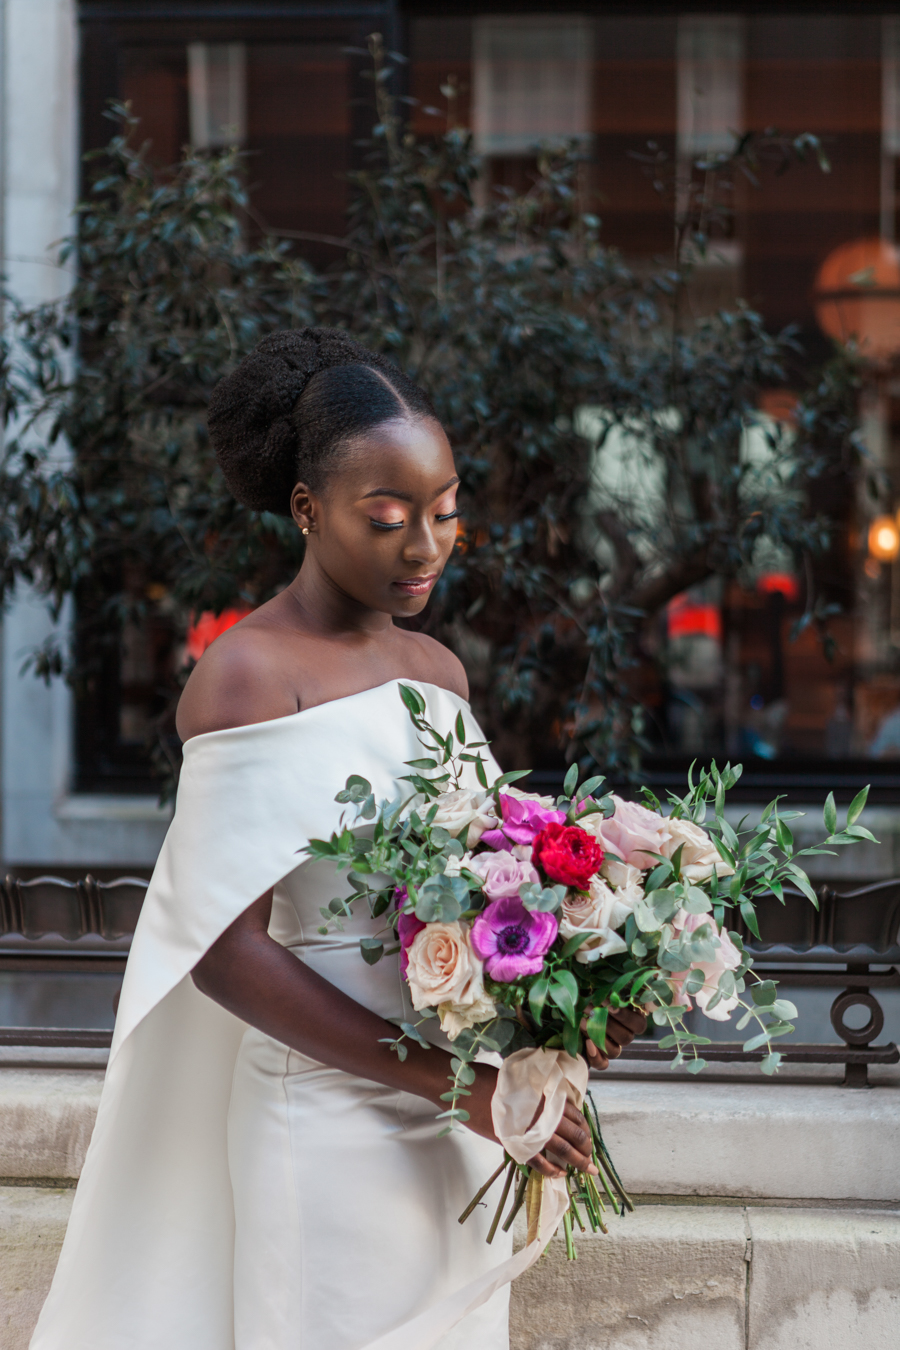 Breathtakingly beautiful - diversity wins in this stunning RSA London wedding editorial! (31)